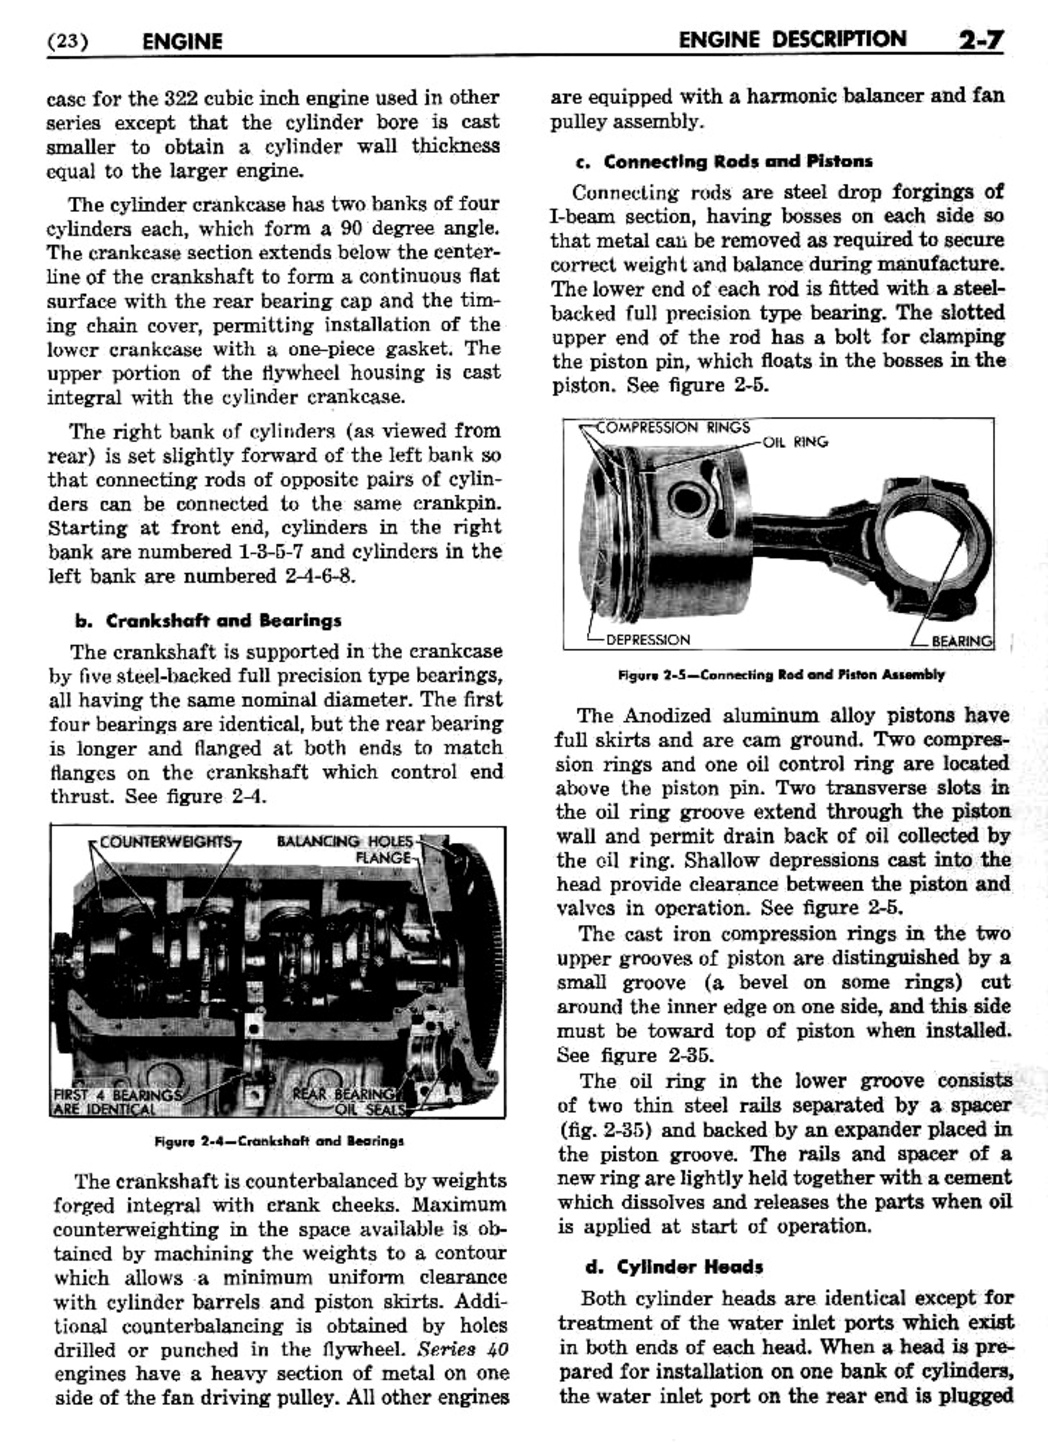 n_03 1955 Buick Shop Manual - Engine-007-007.jpg